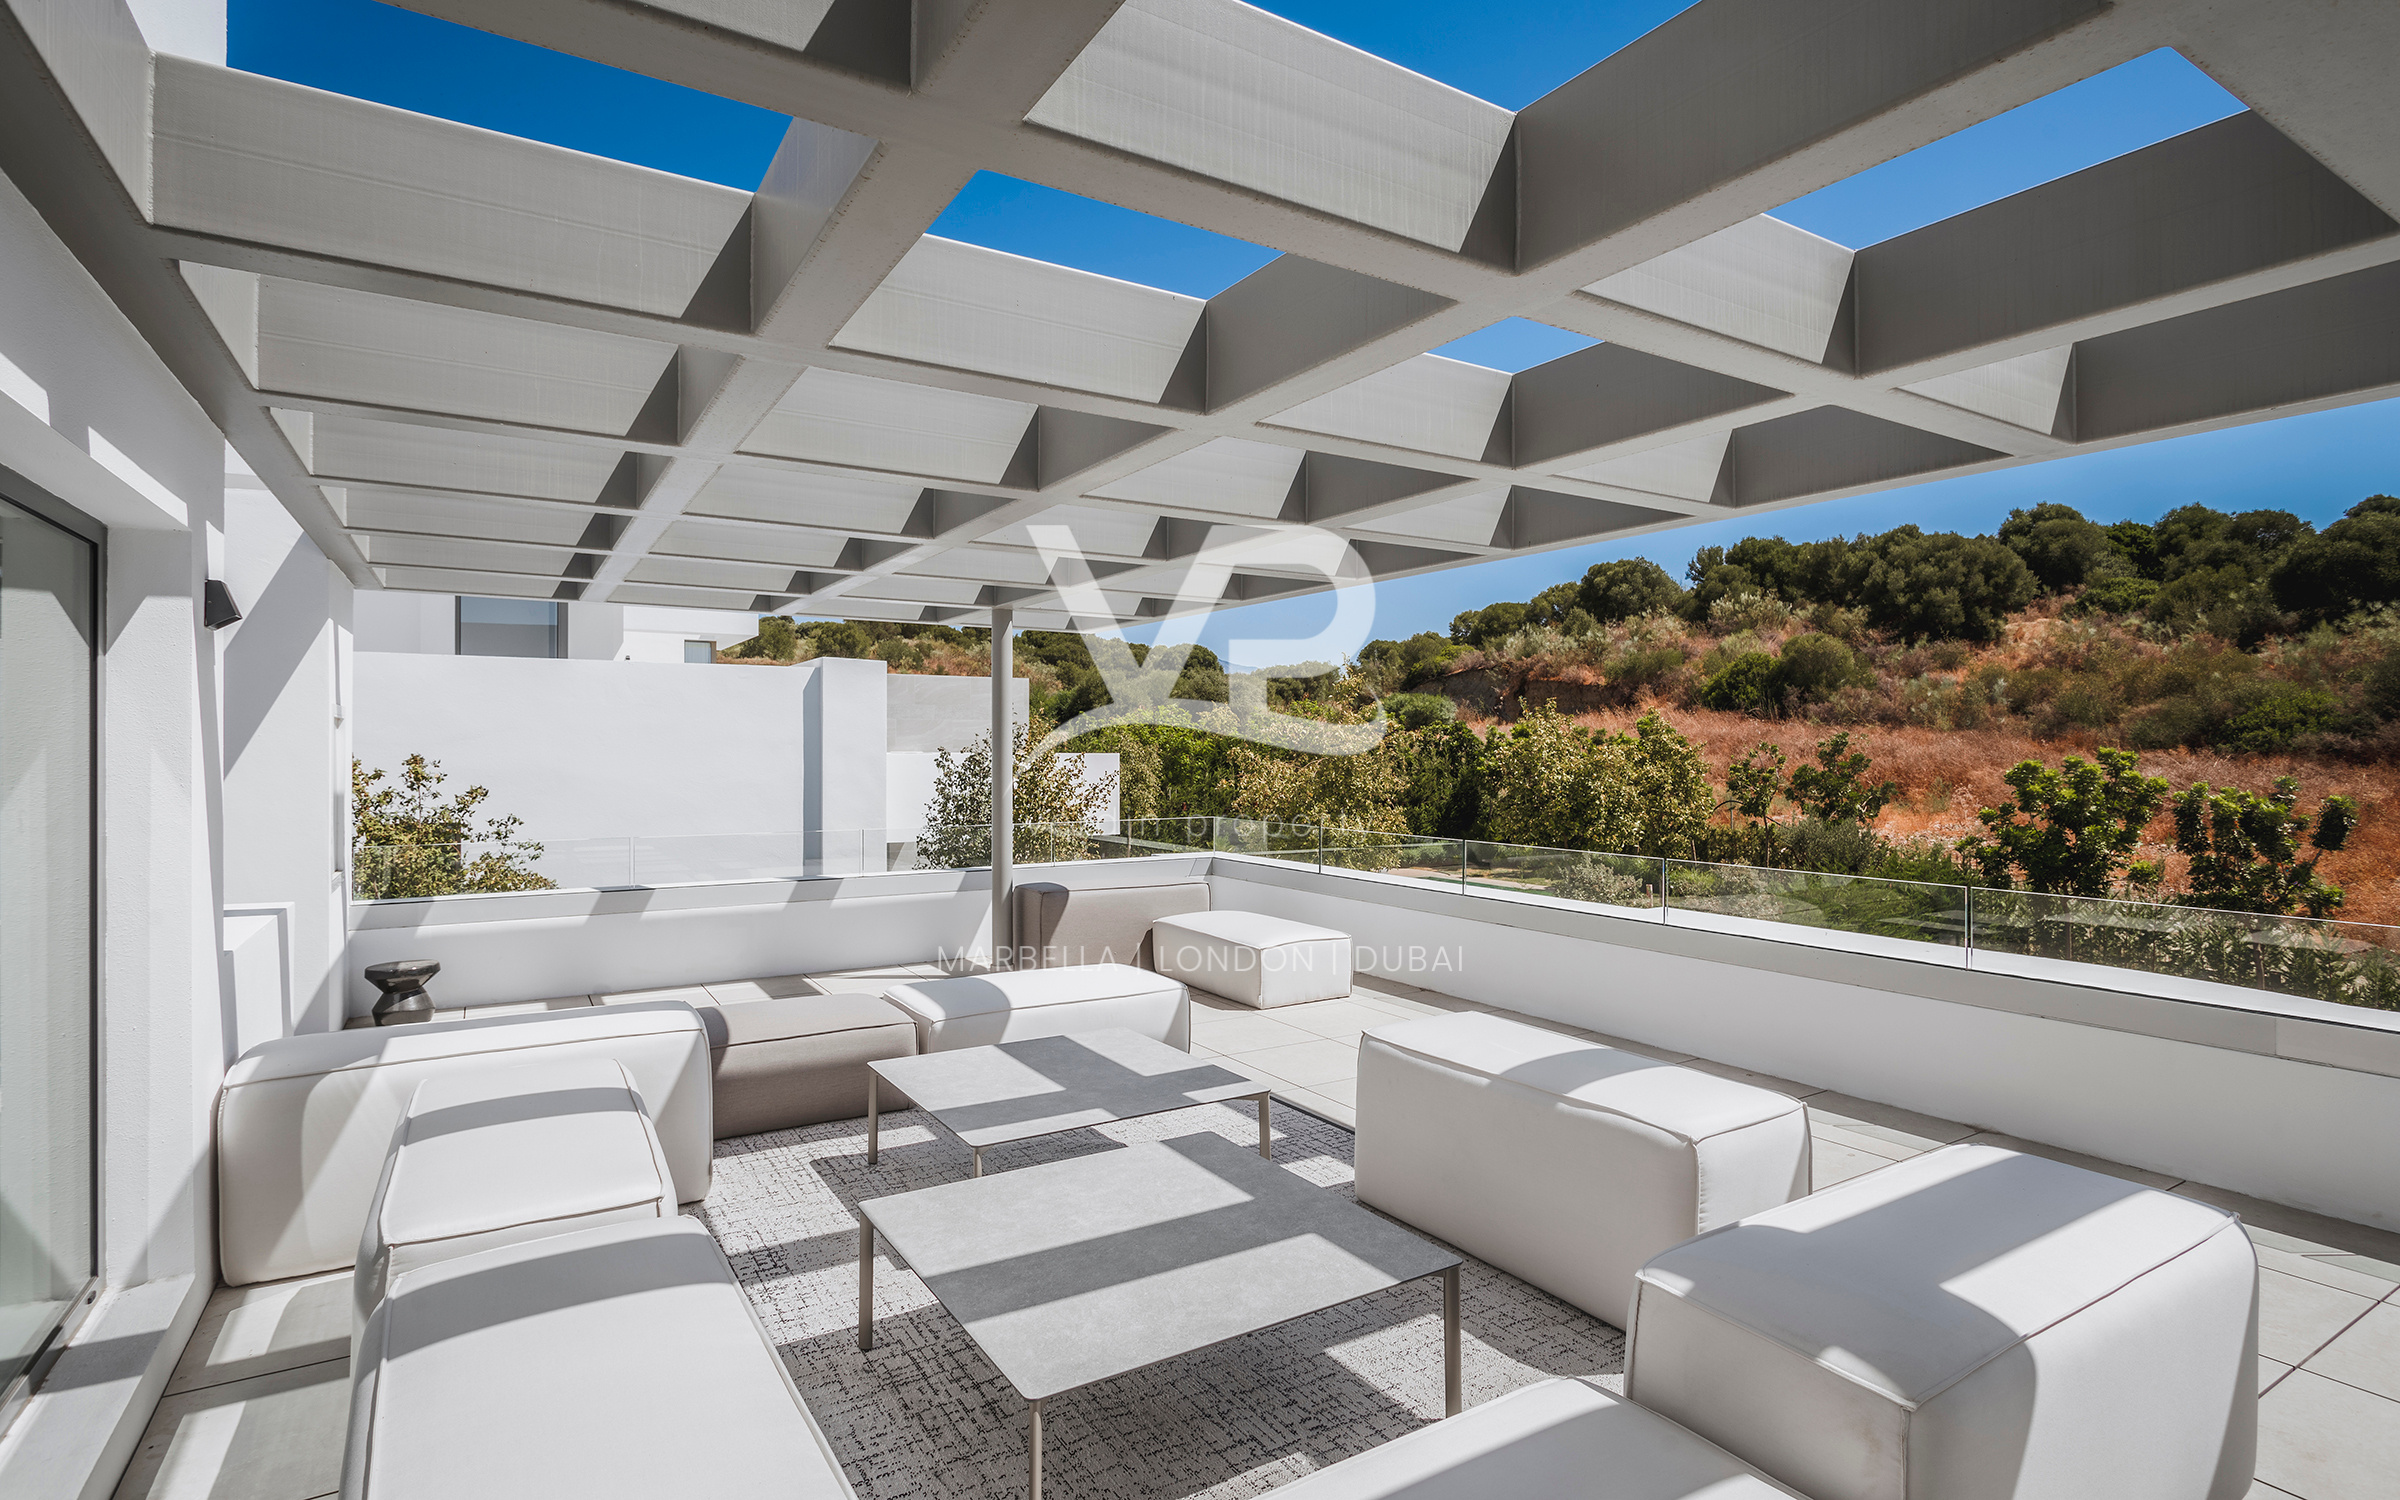 Casa Diana, new villa in Kings Hills - Verdin Property